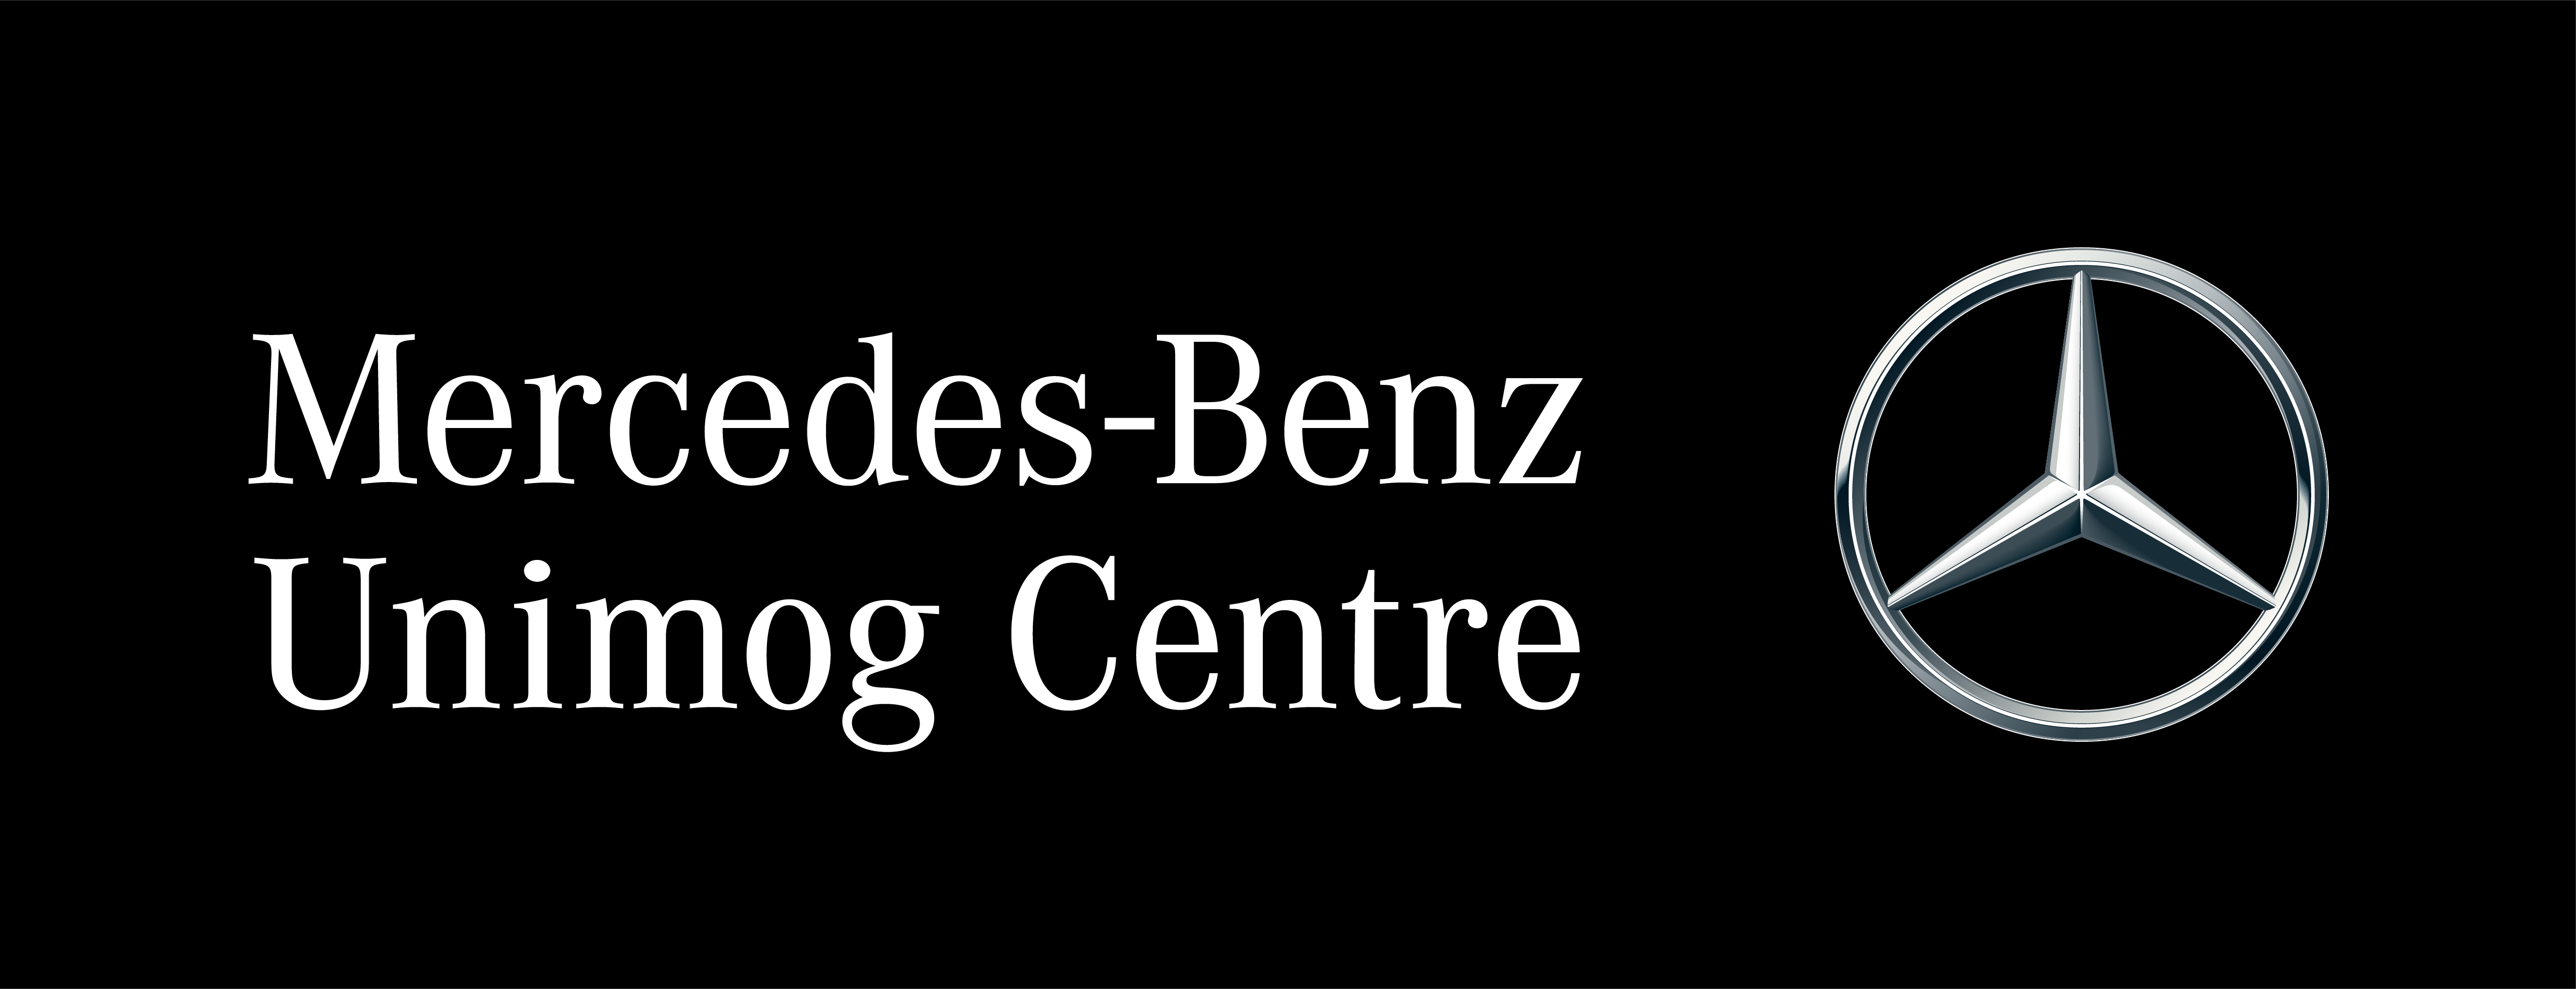 Mercedes-Benz Unimog Centre